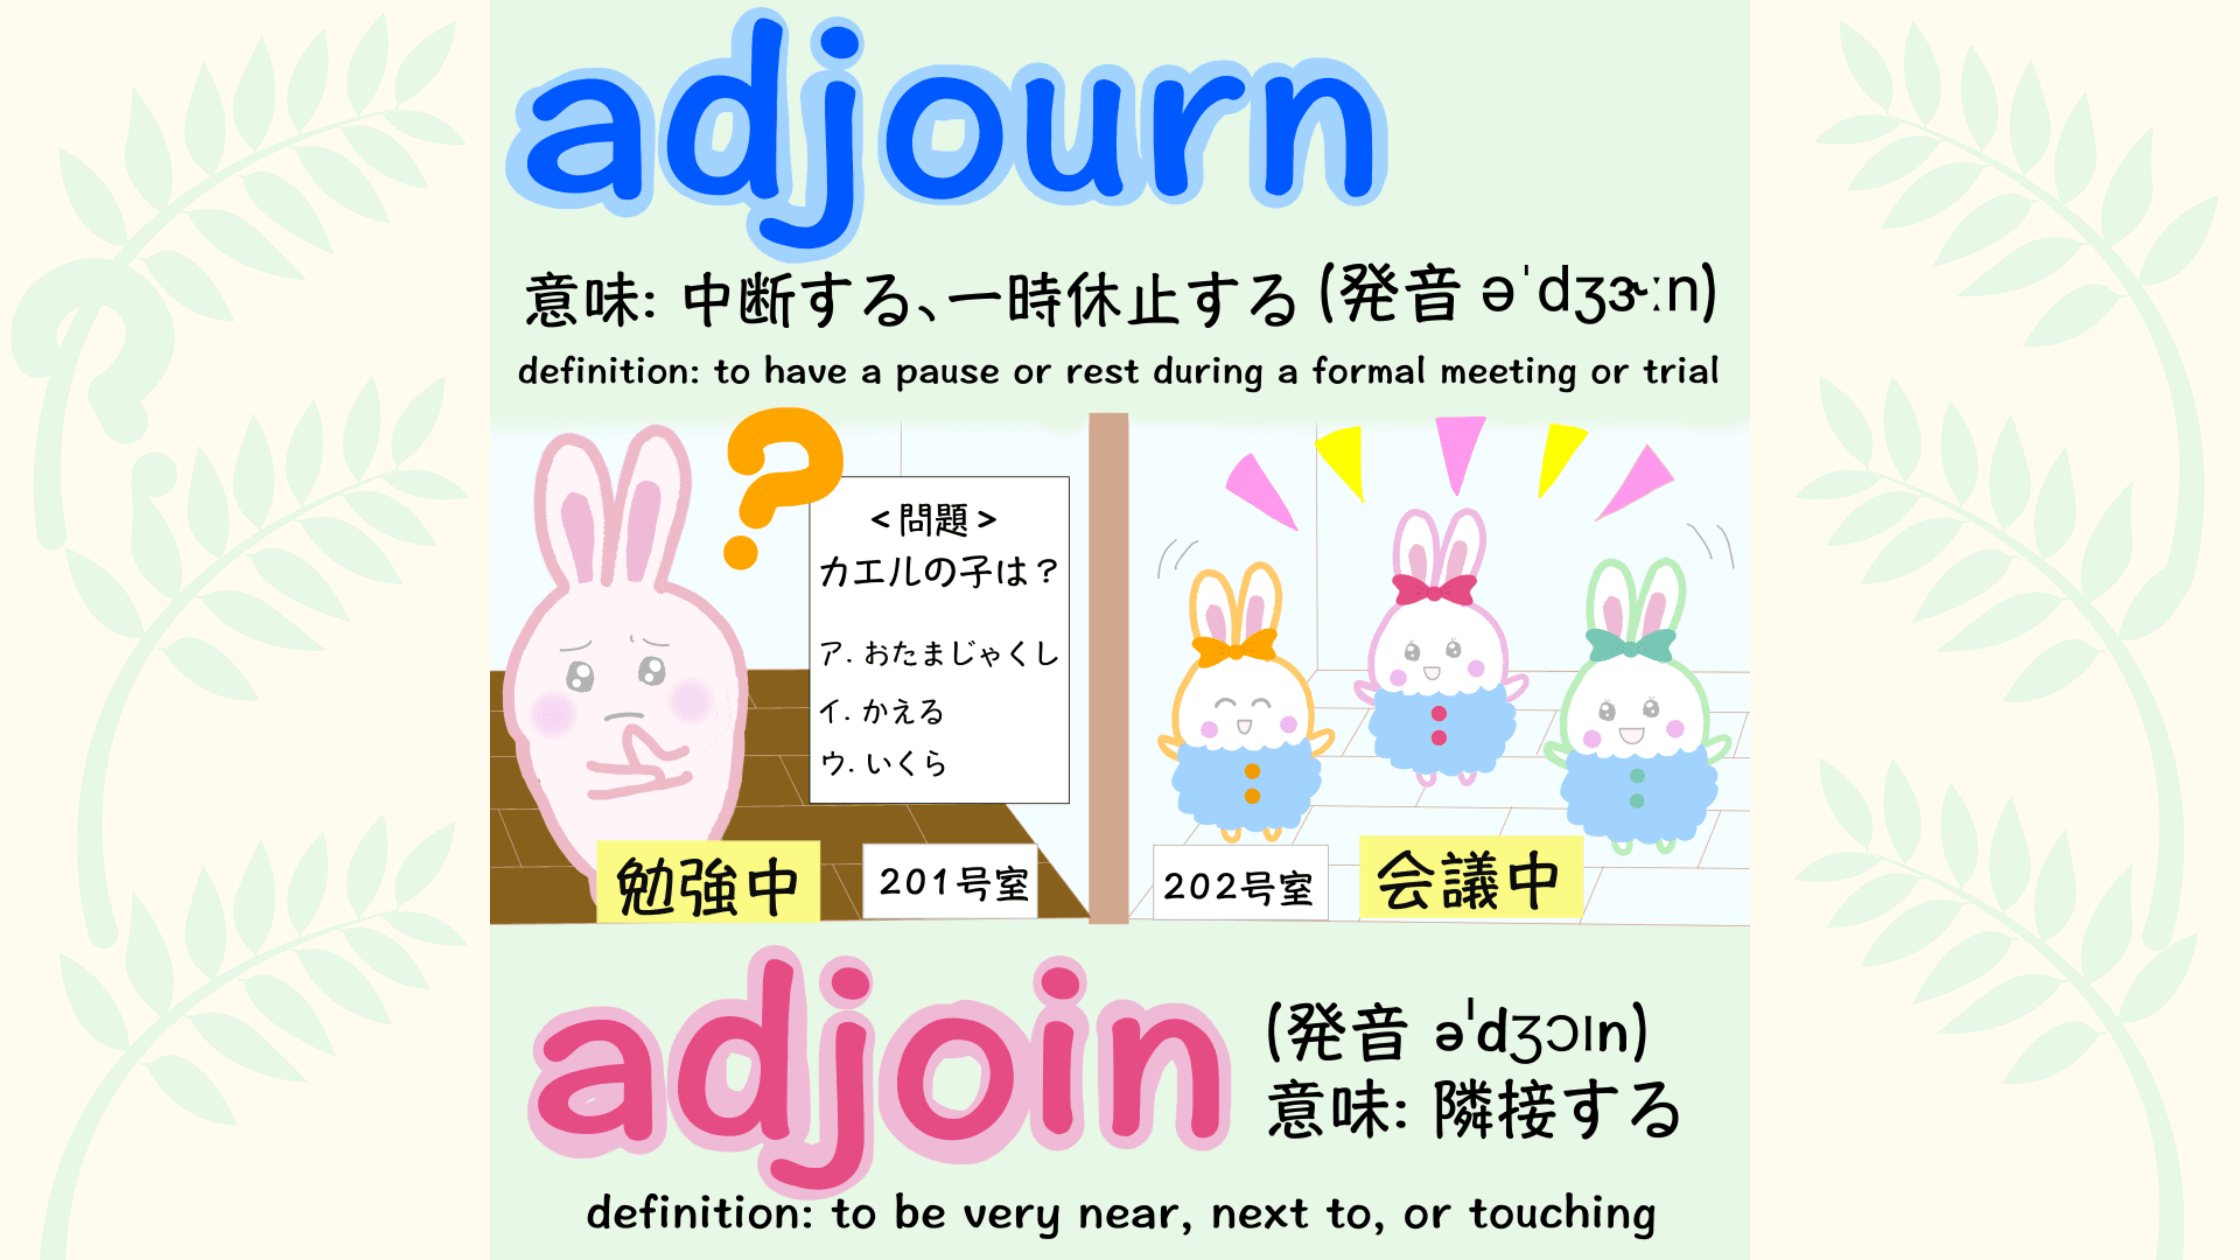 23 Adjourn Adjoin 意味と例文 Happy Chit Chat 英会話初心者の英語学習を応援するサイト